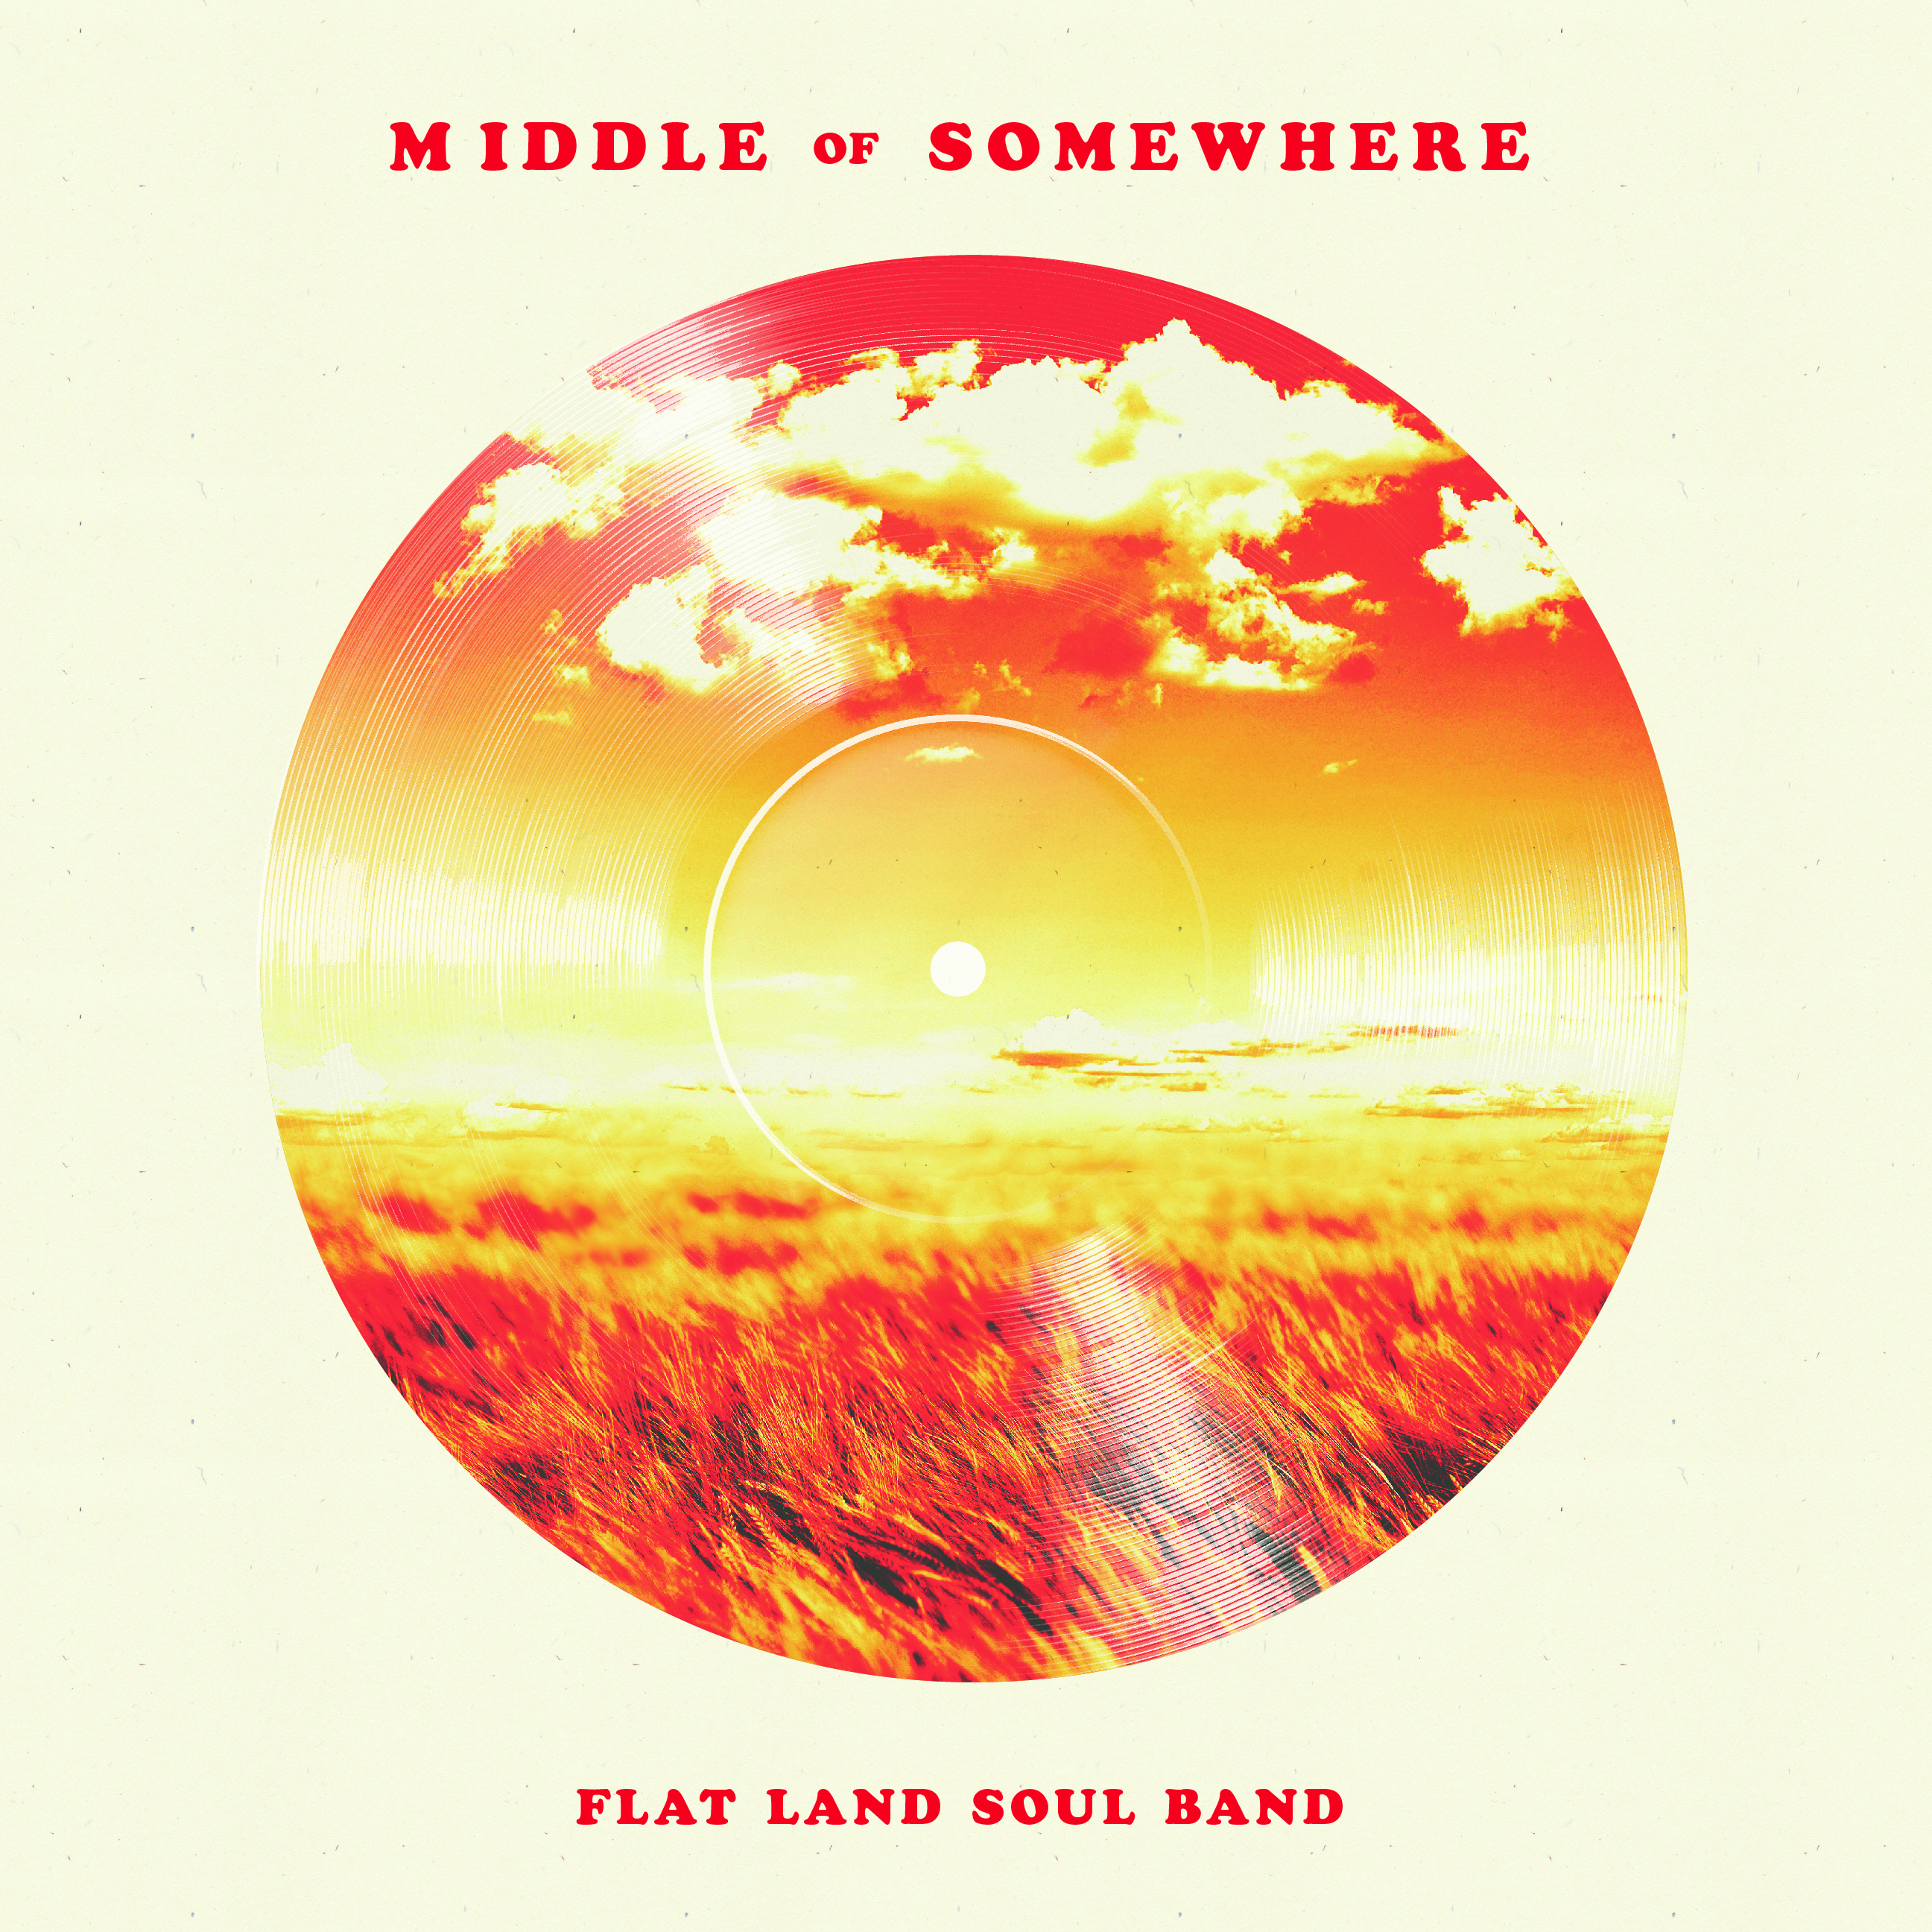 Flat Land Soul Land CD cover front